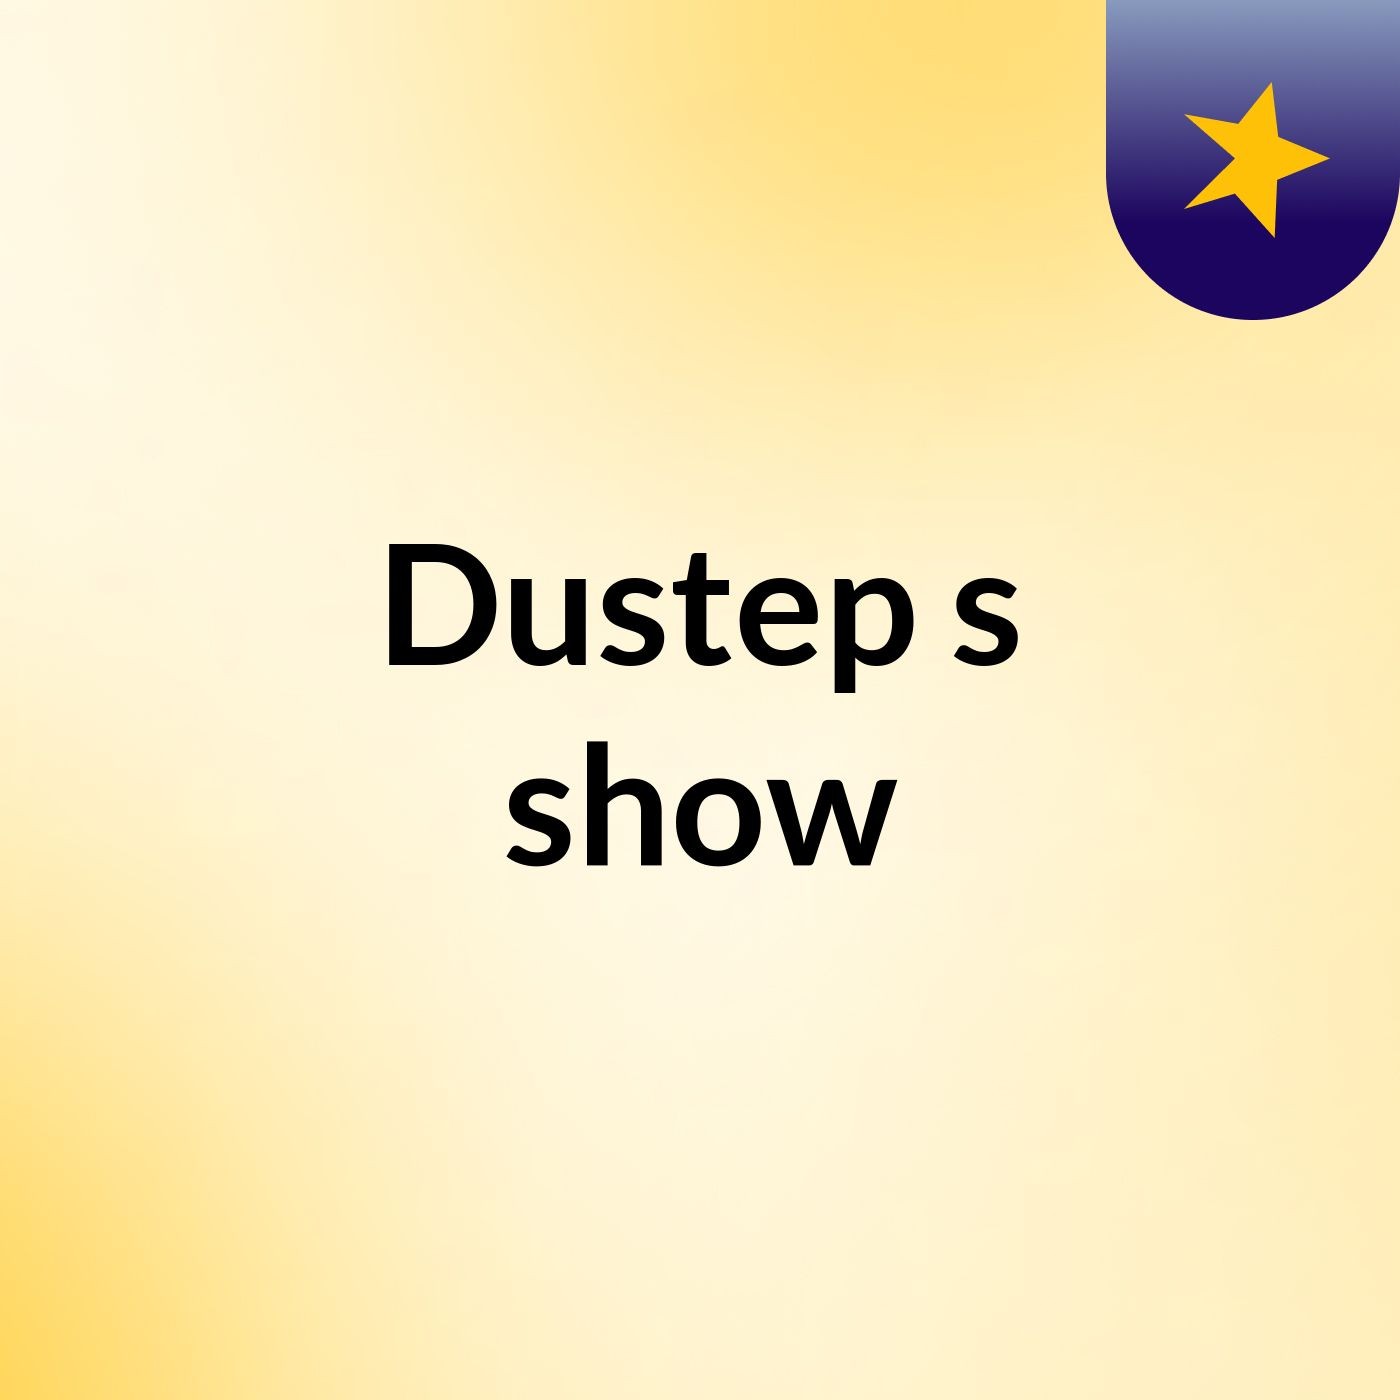 Dustep's show